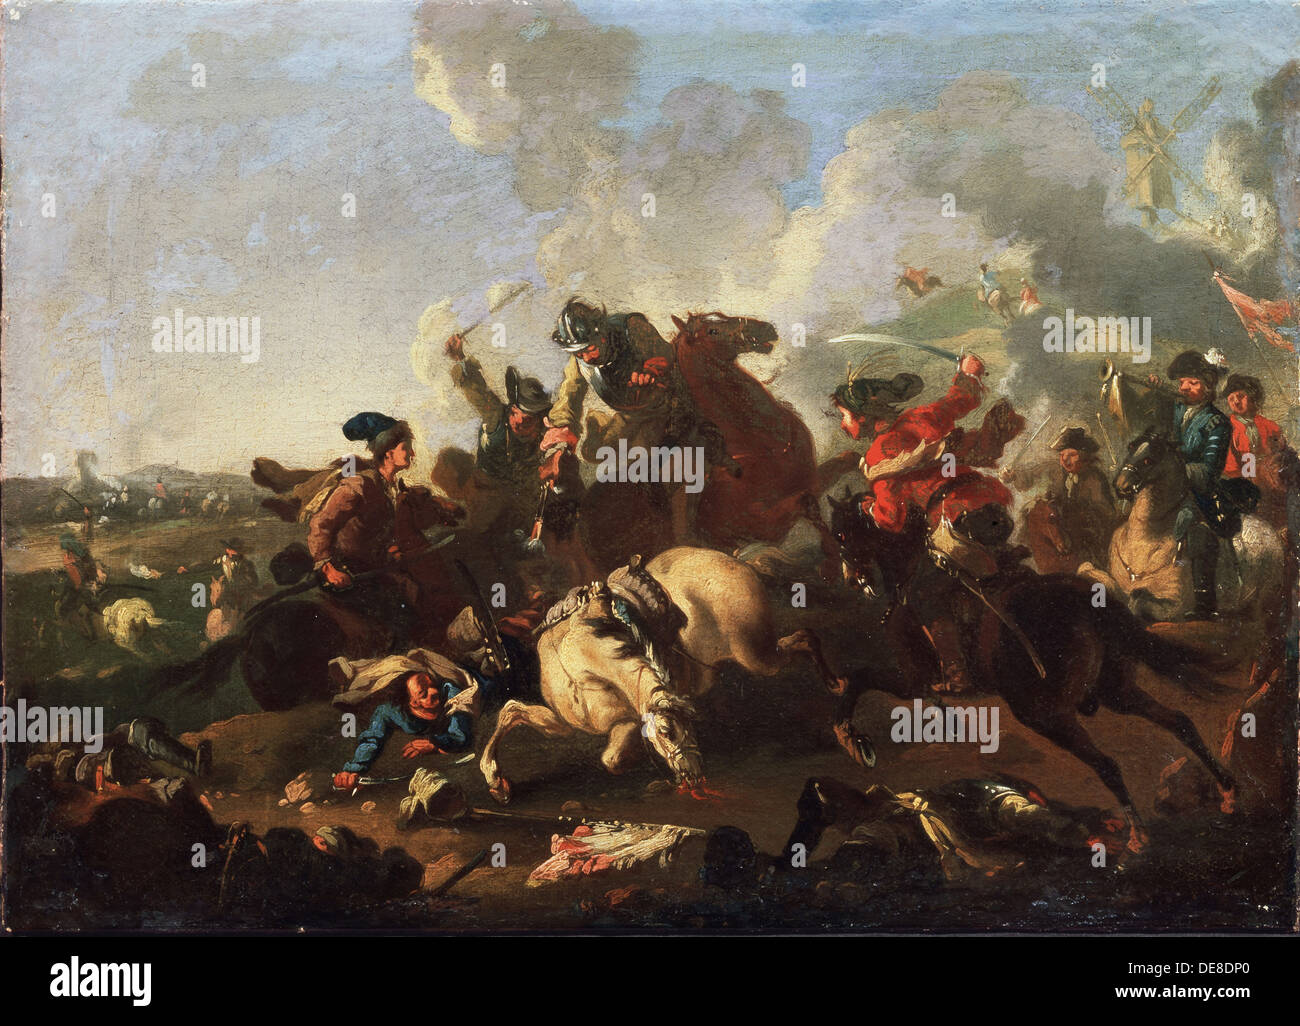 Scene from the battle of Poltava. Artist: Kotzebue, Alexander von (1815-1889) Stock Photo